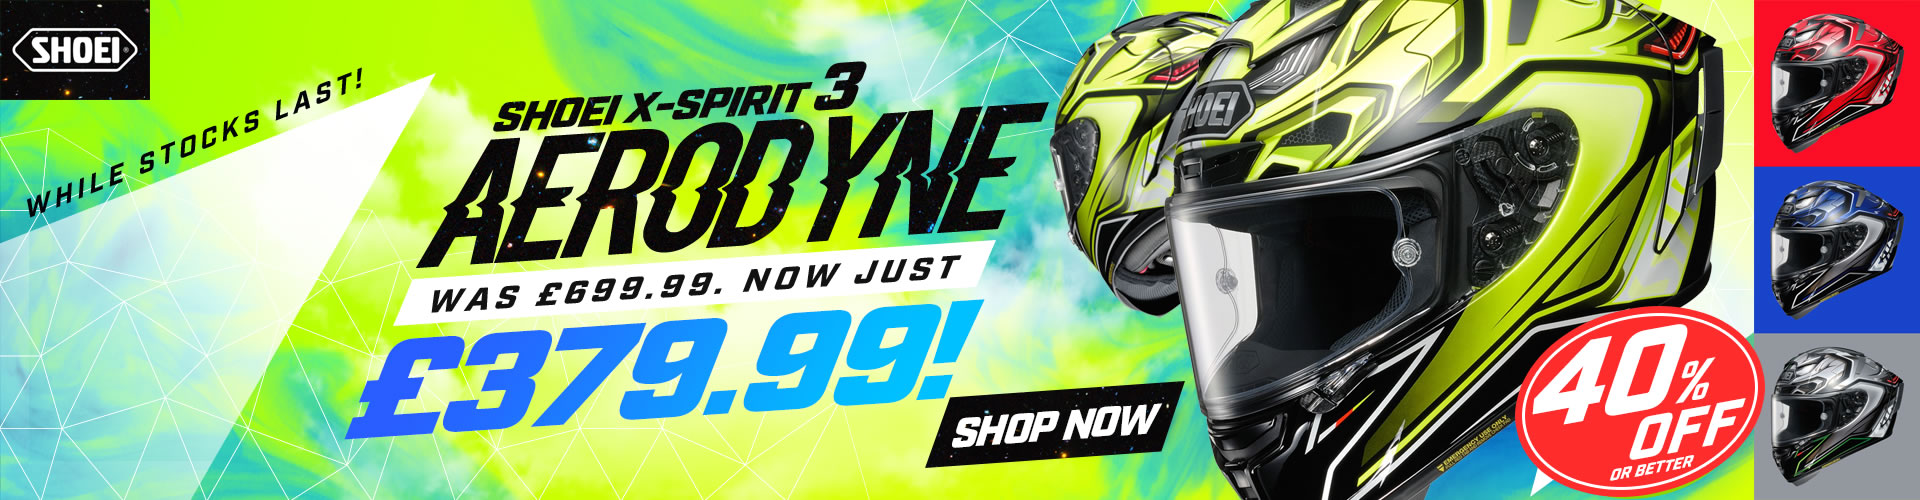 Shoei X-SPIRIT 3 Aerodyne now on SALE!